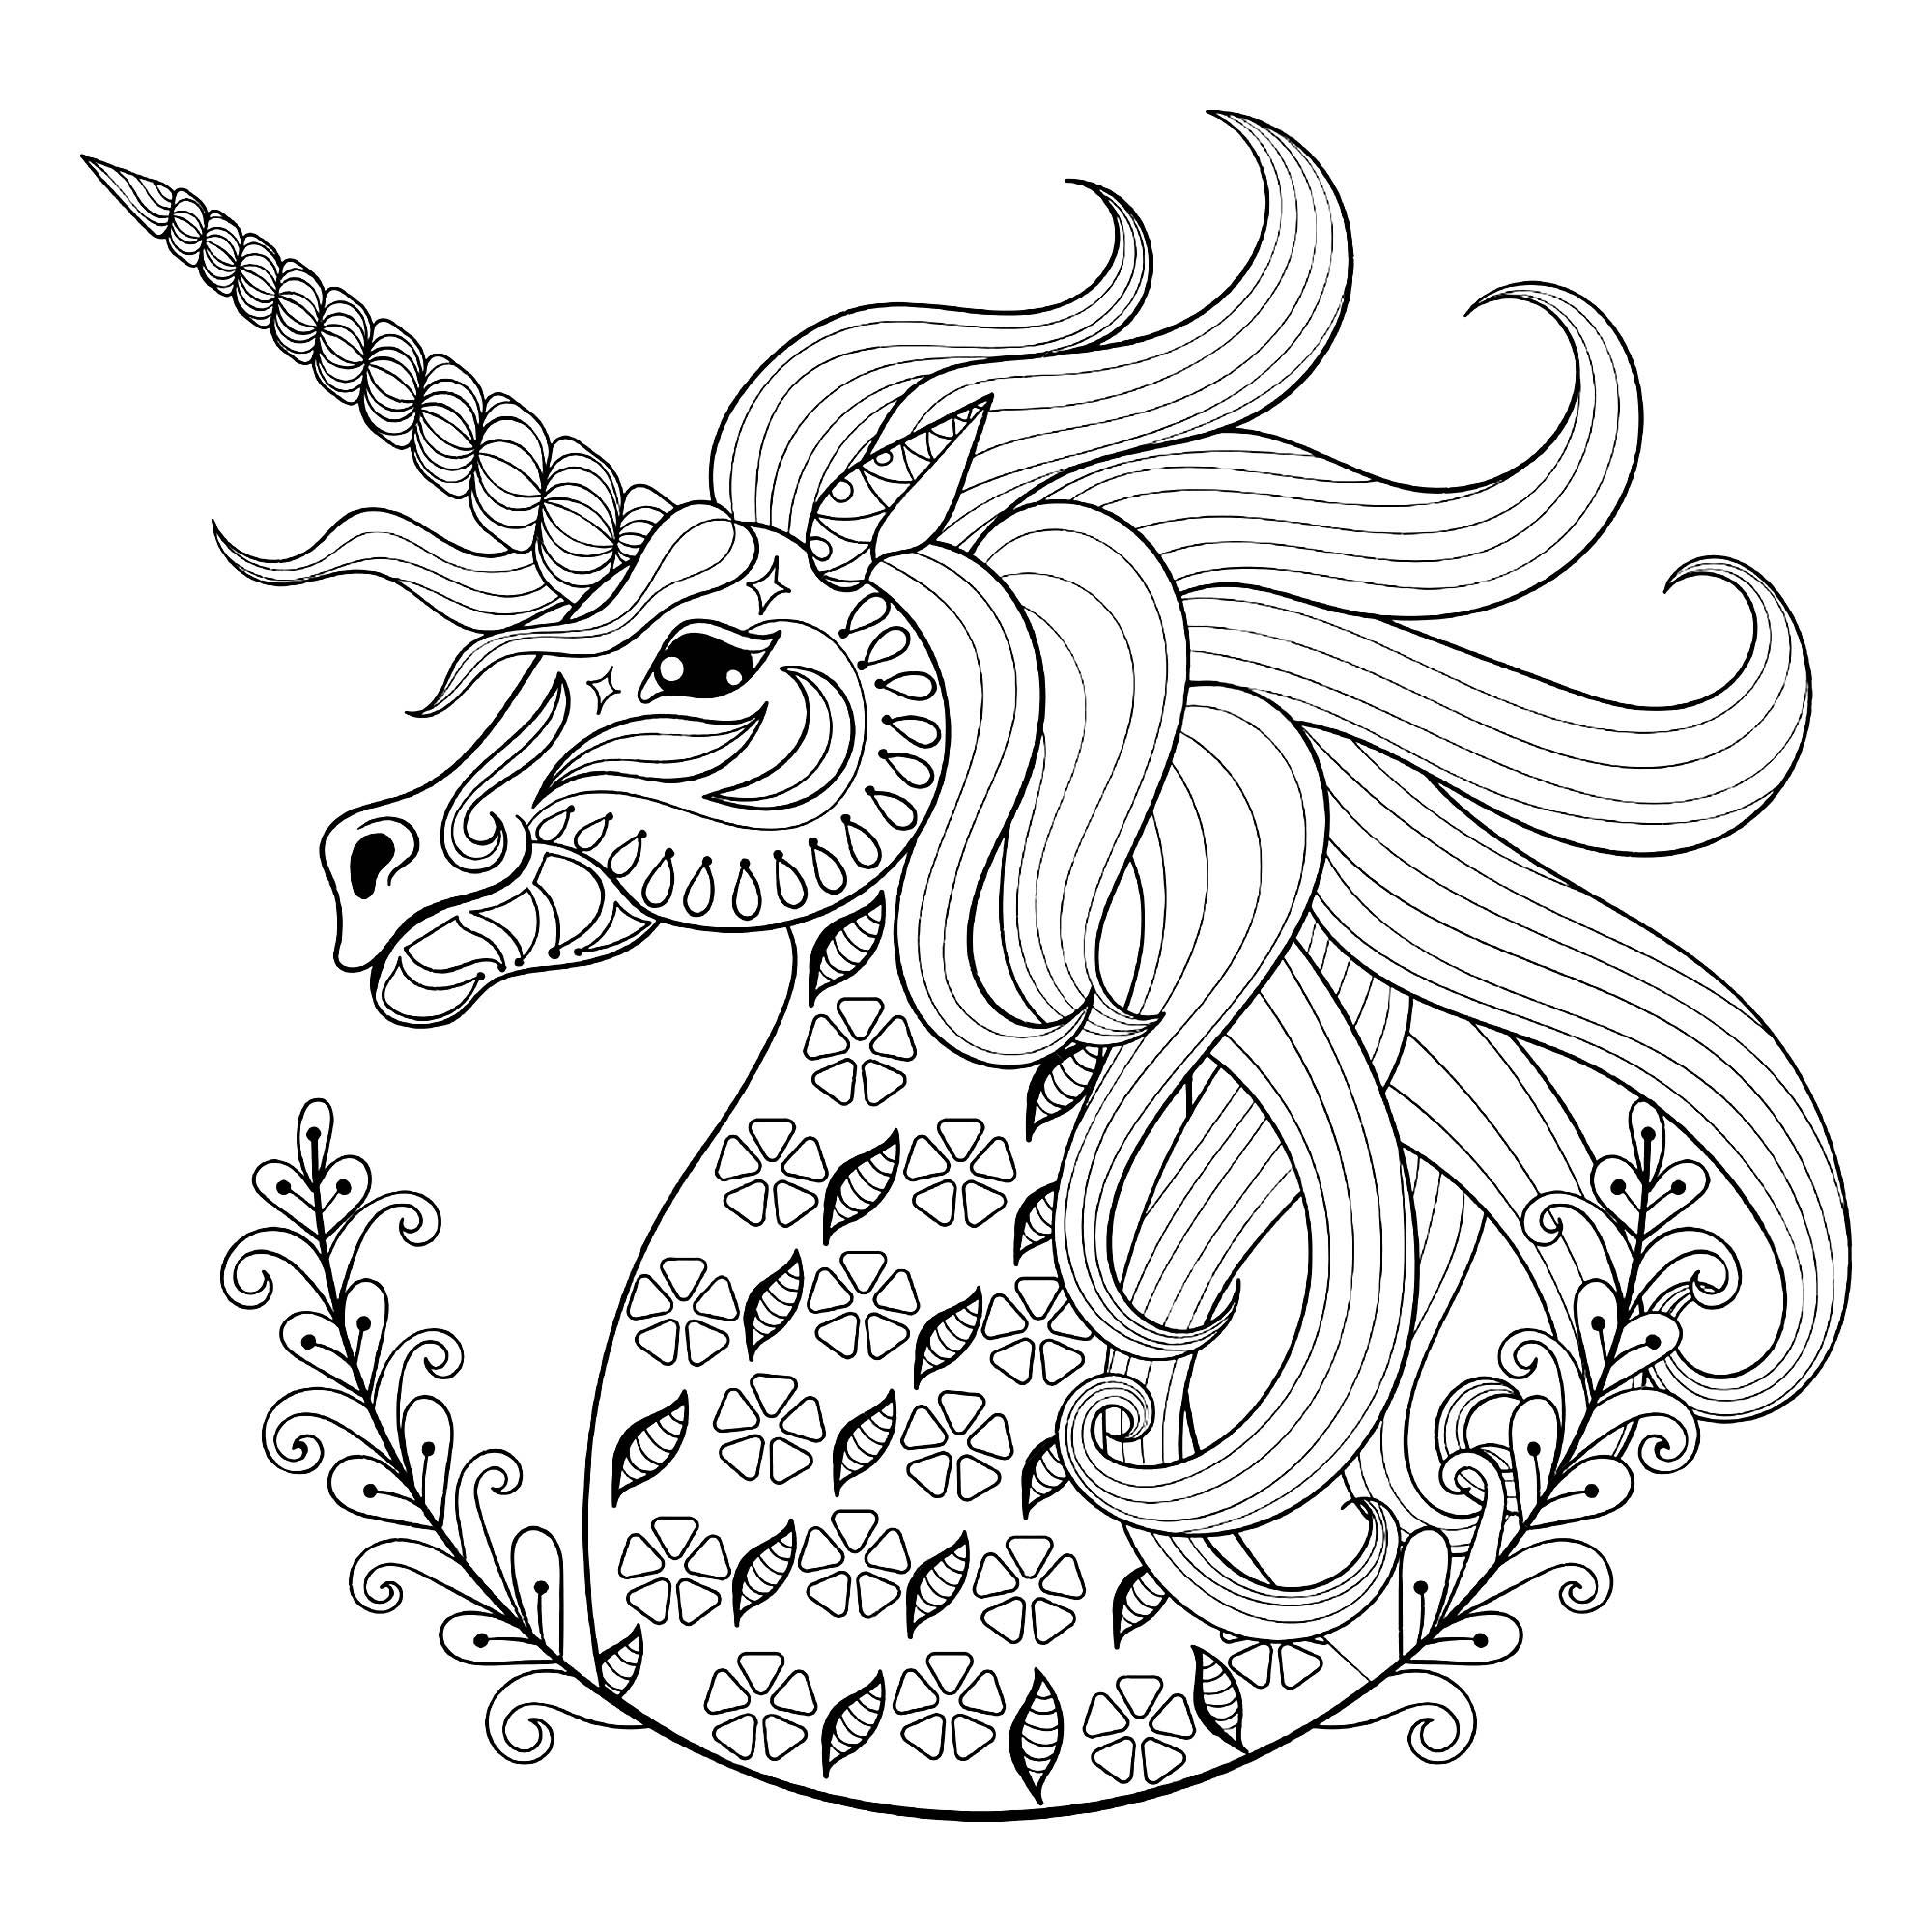 Tête de licorne : coloriage avec jolis motifs, Source : 123rf   Artiste : Ipanki